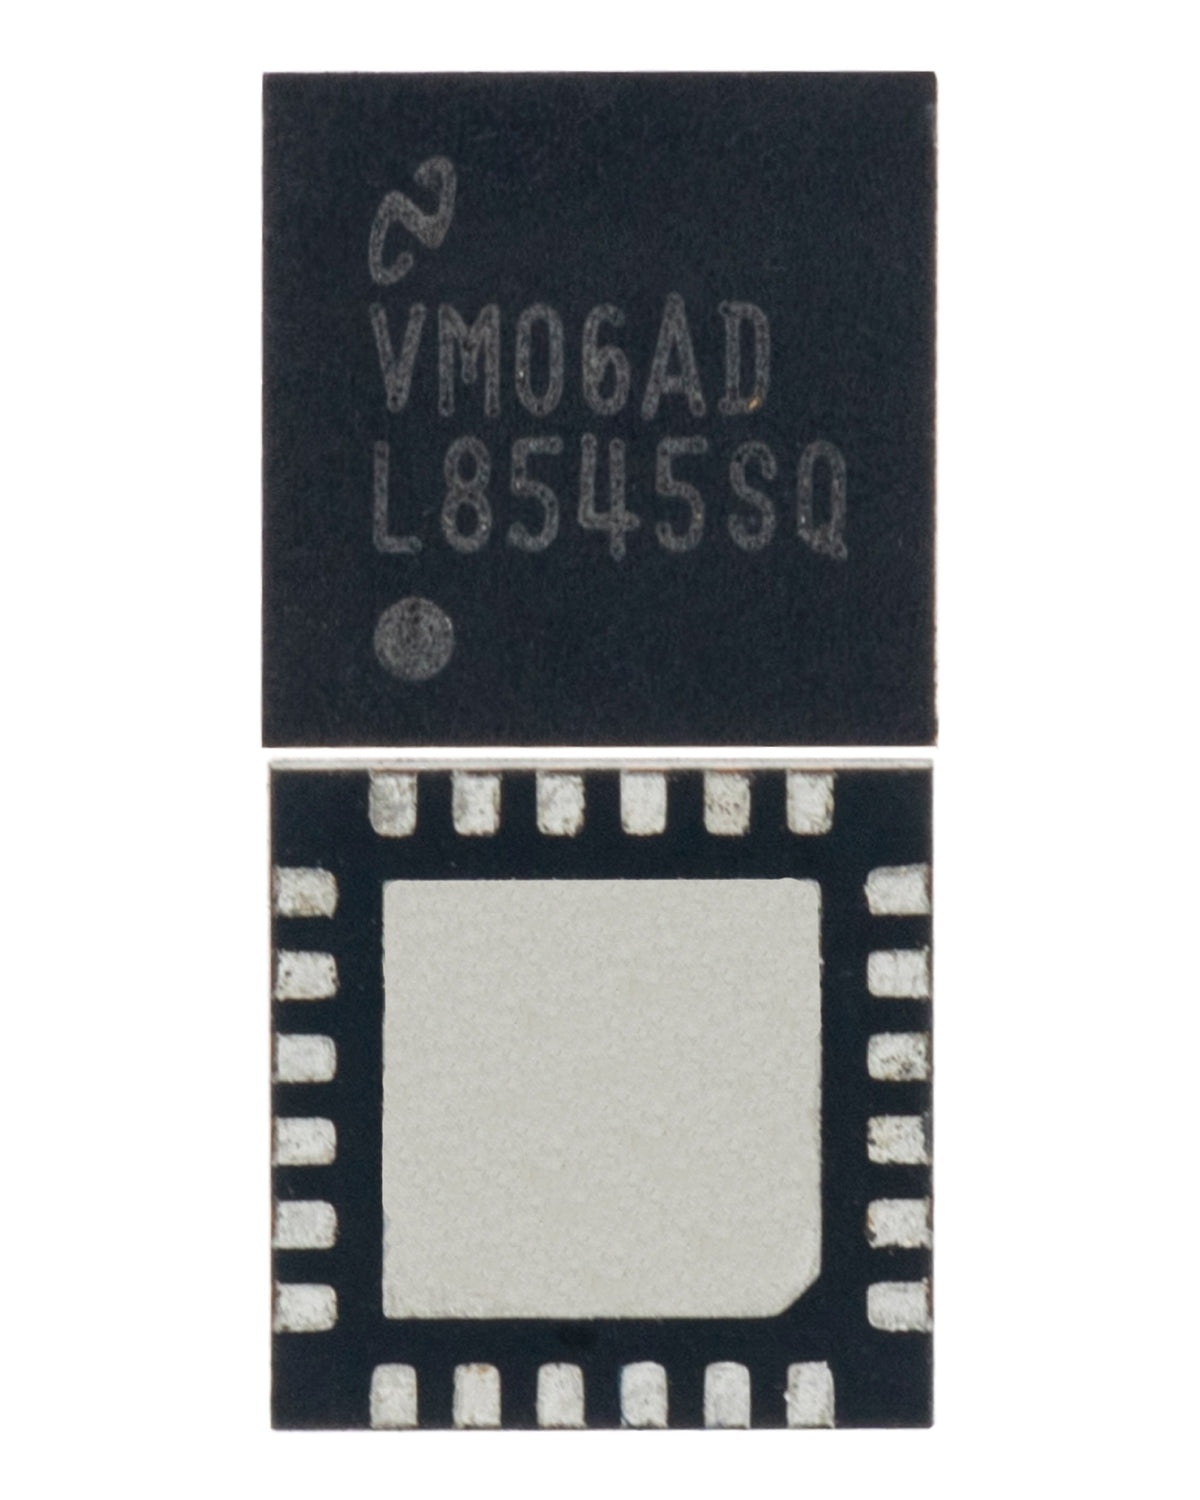 LCD BACKLIGHT DRIVER IC COMPATIBLE WITH MACBOOK PRO UNIBODY 15" A1286 (LP8545SQ / L8545SQ / LP8545: QFN-24 PIN)